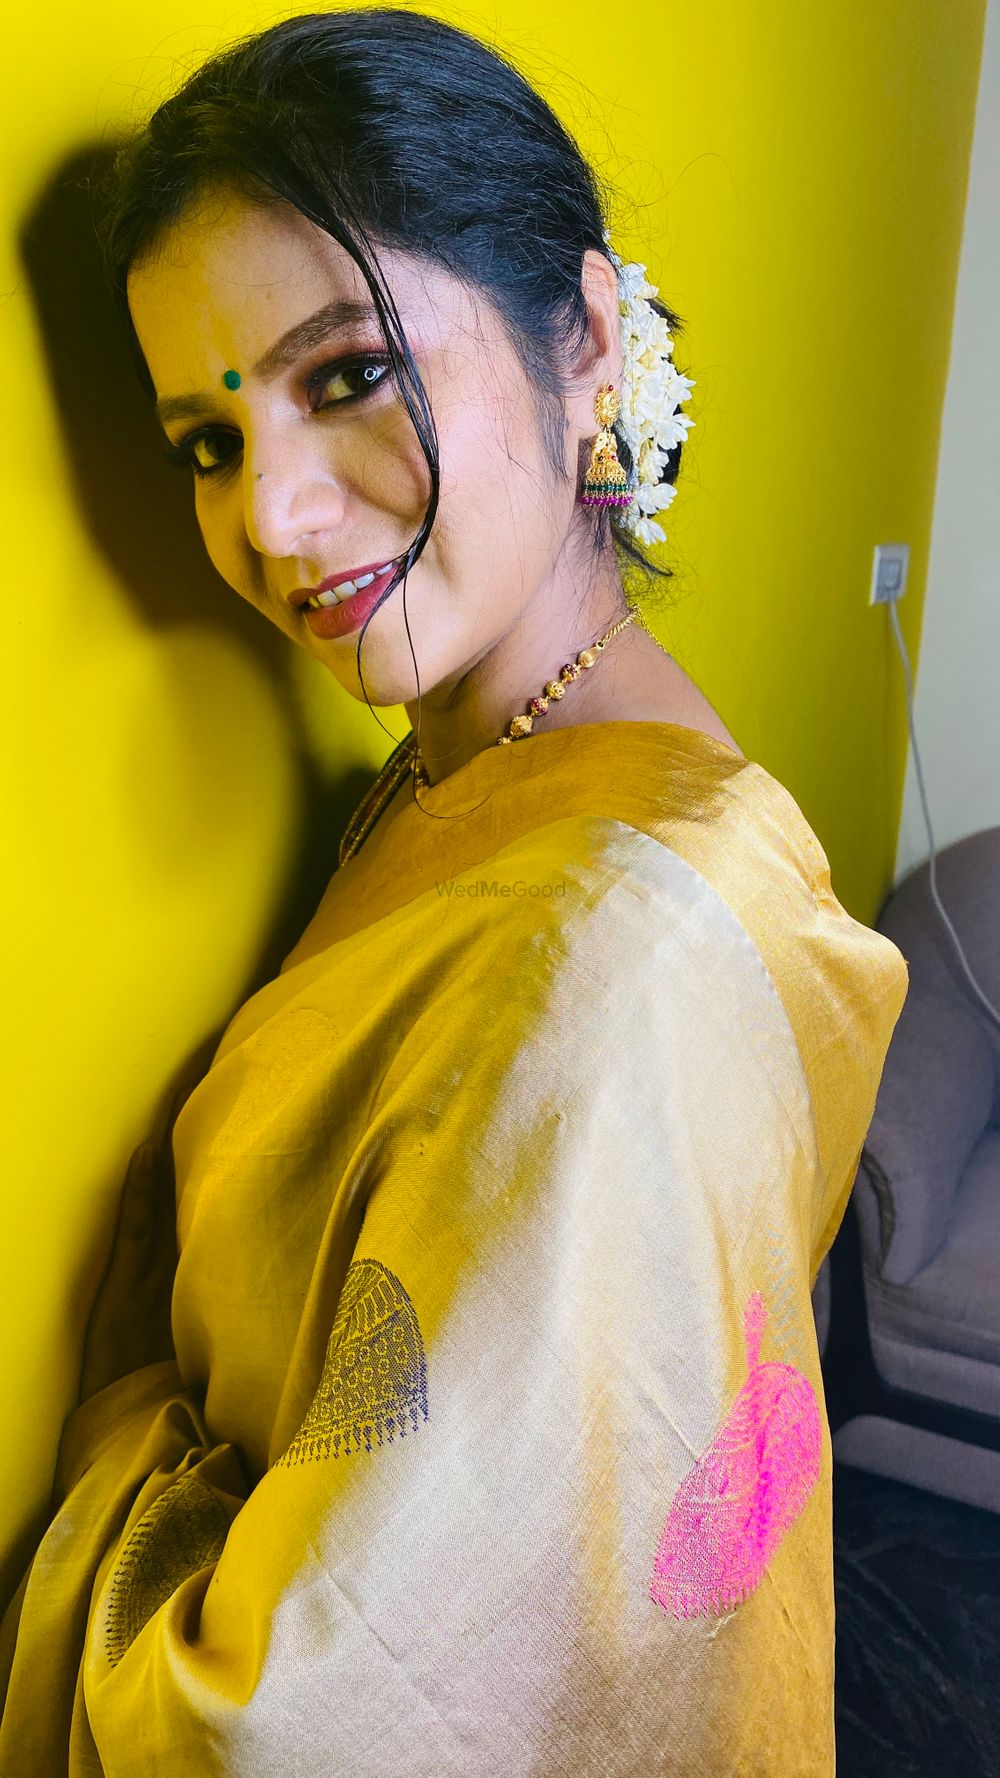 Photo From Non bridal gallery - By Padma Kiran - Makeup Artist